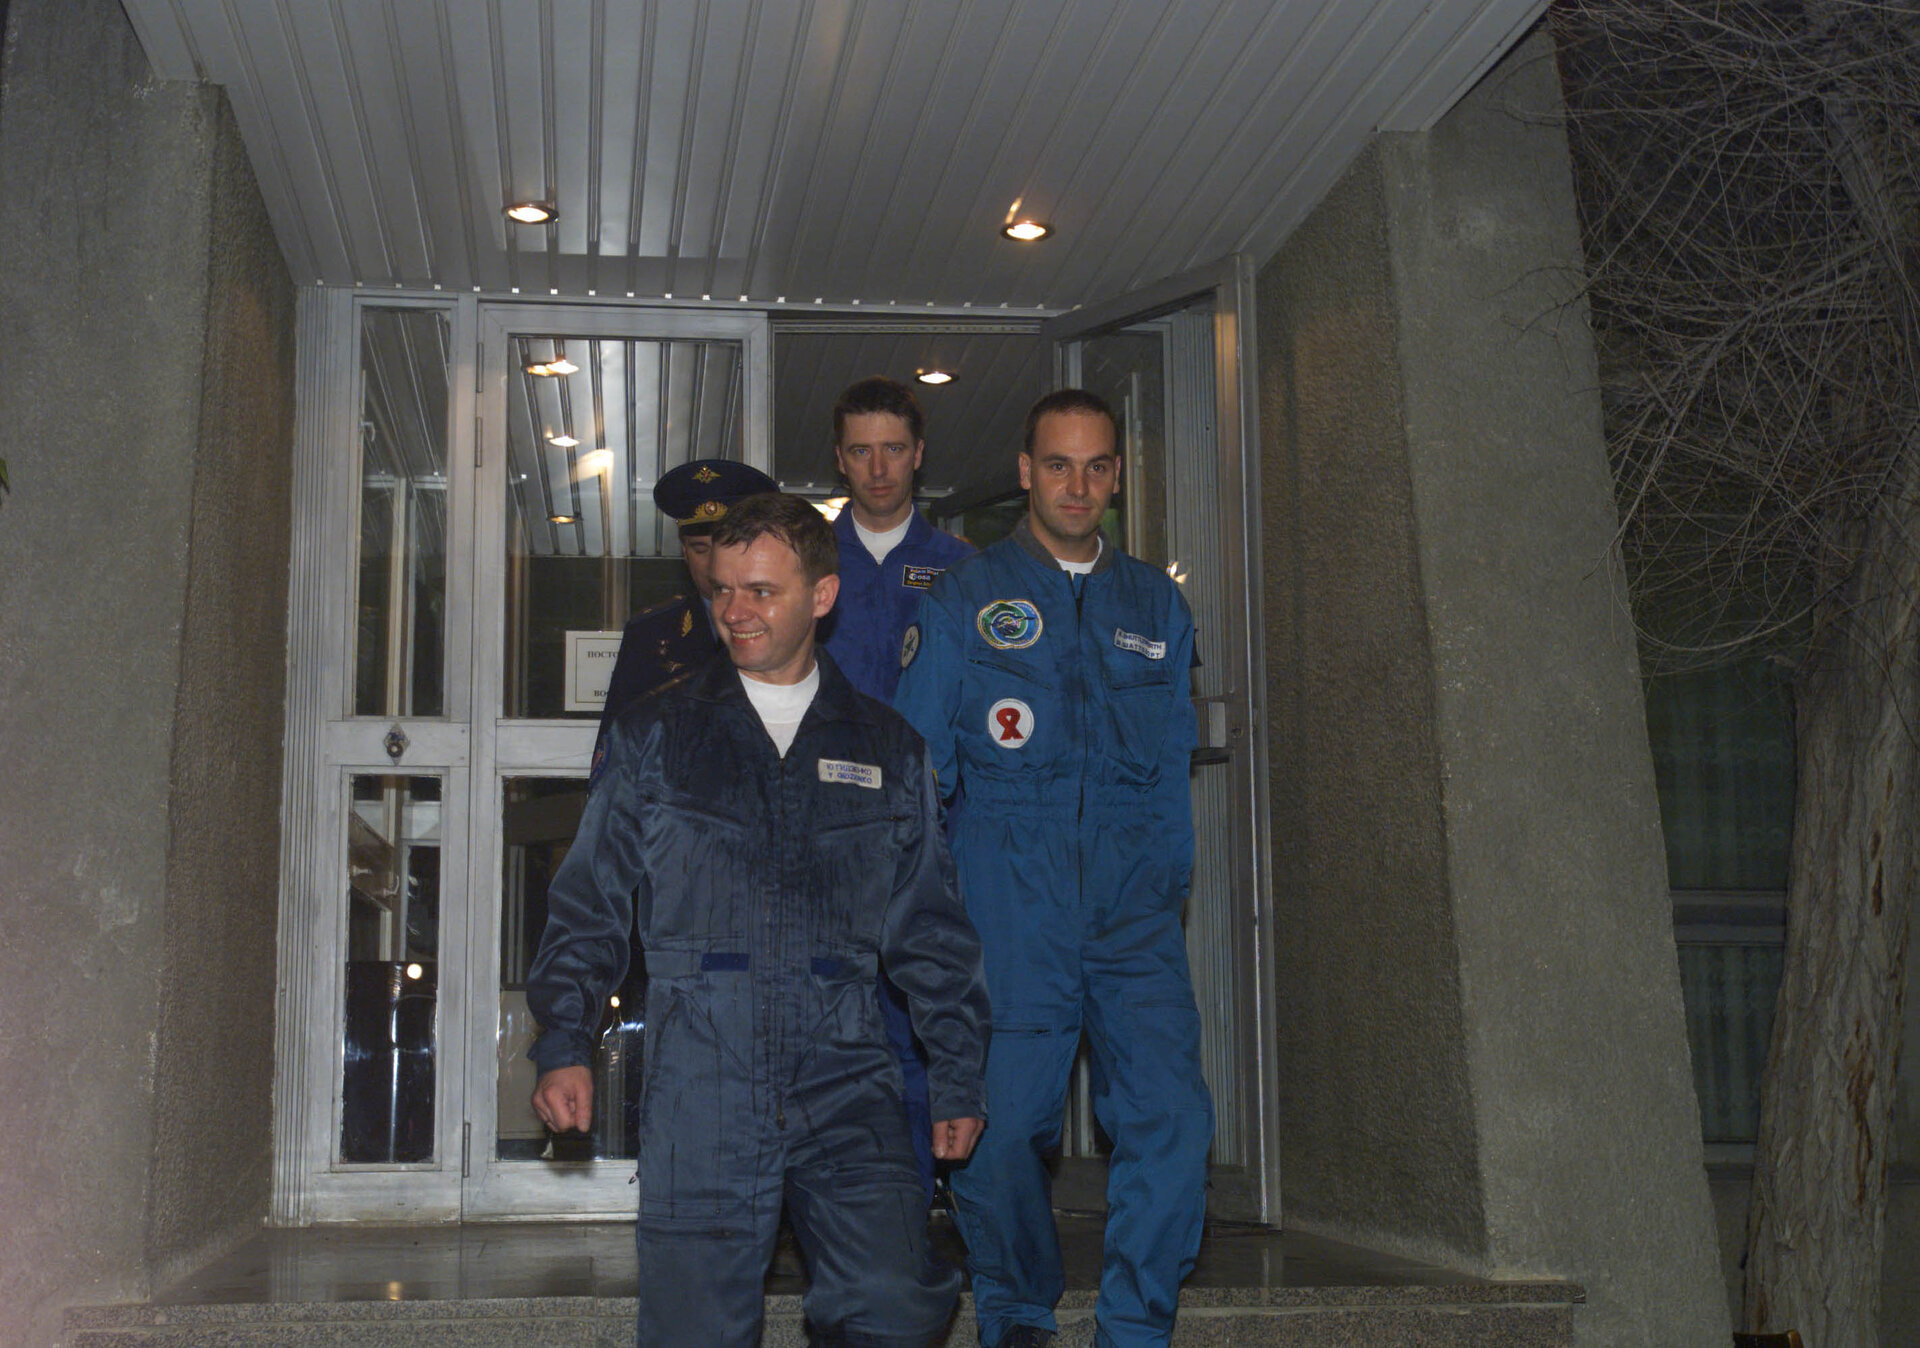 Marco Polo mission crew departure for dons spacesuit at Baikonour  (Thursday 25 April 2002)